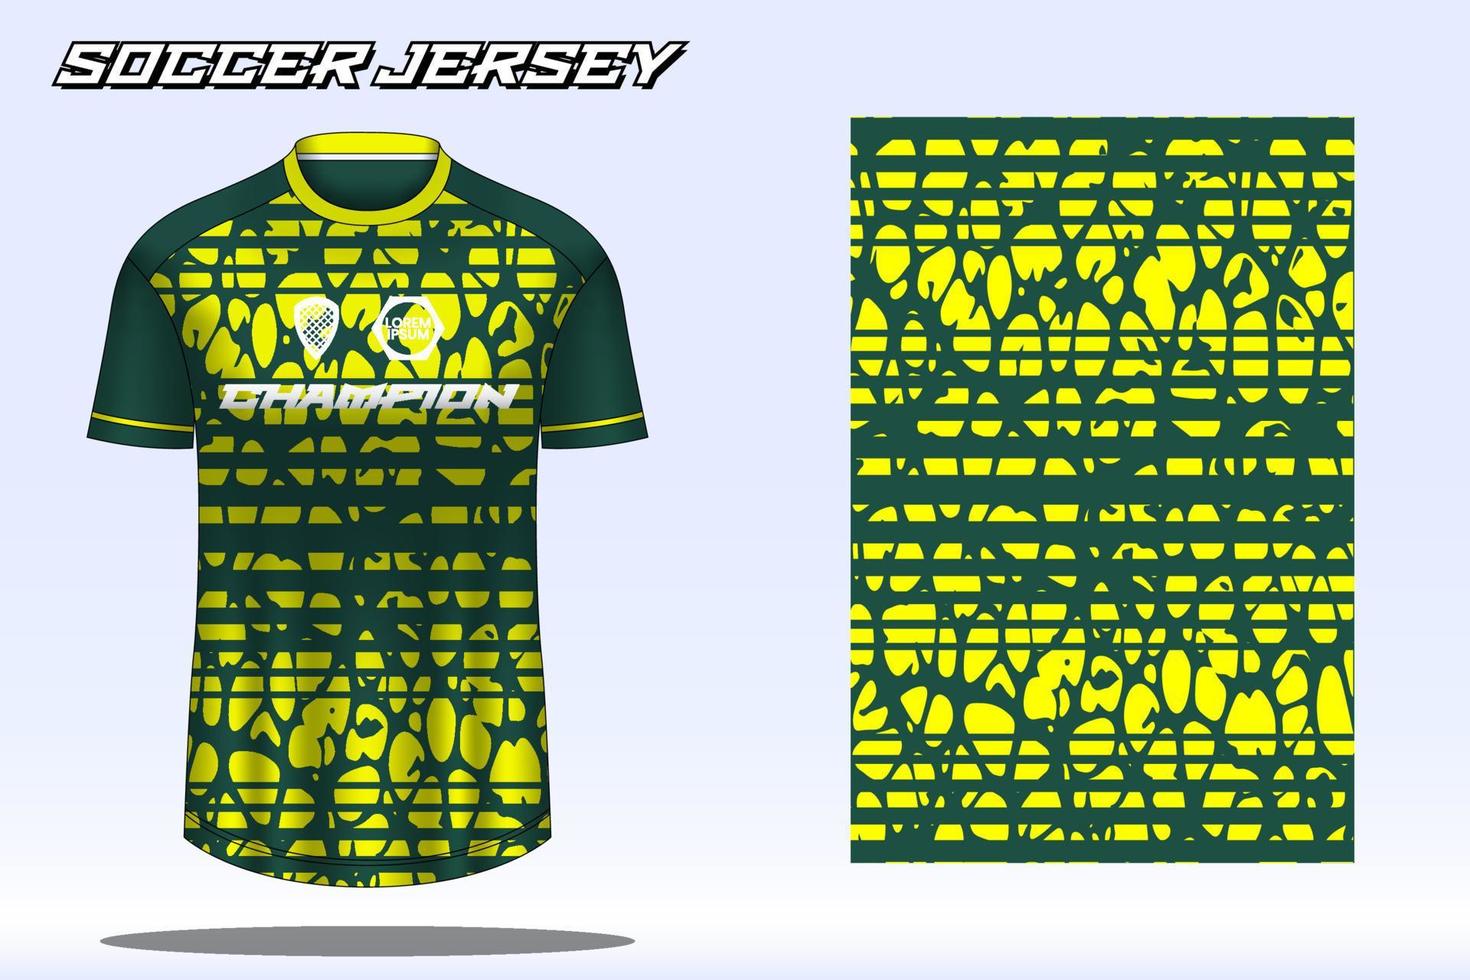 Soccer jersey sport t-shirt design mockup for football club 05 vector